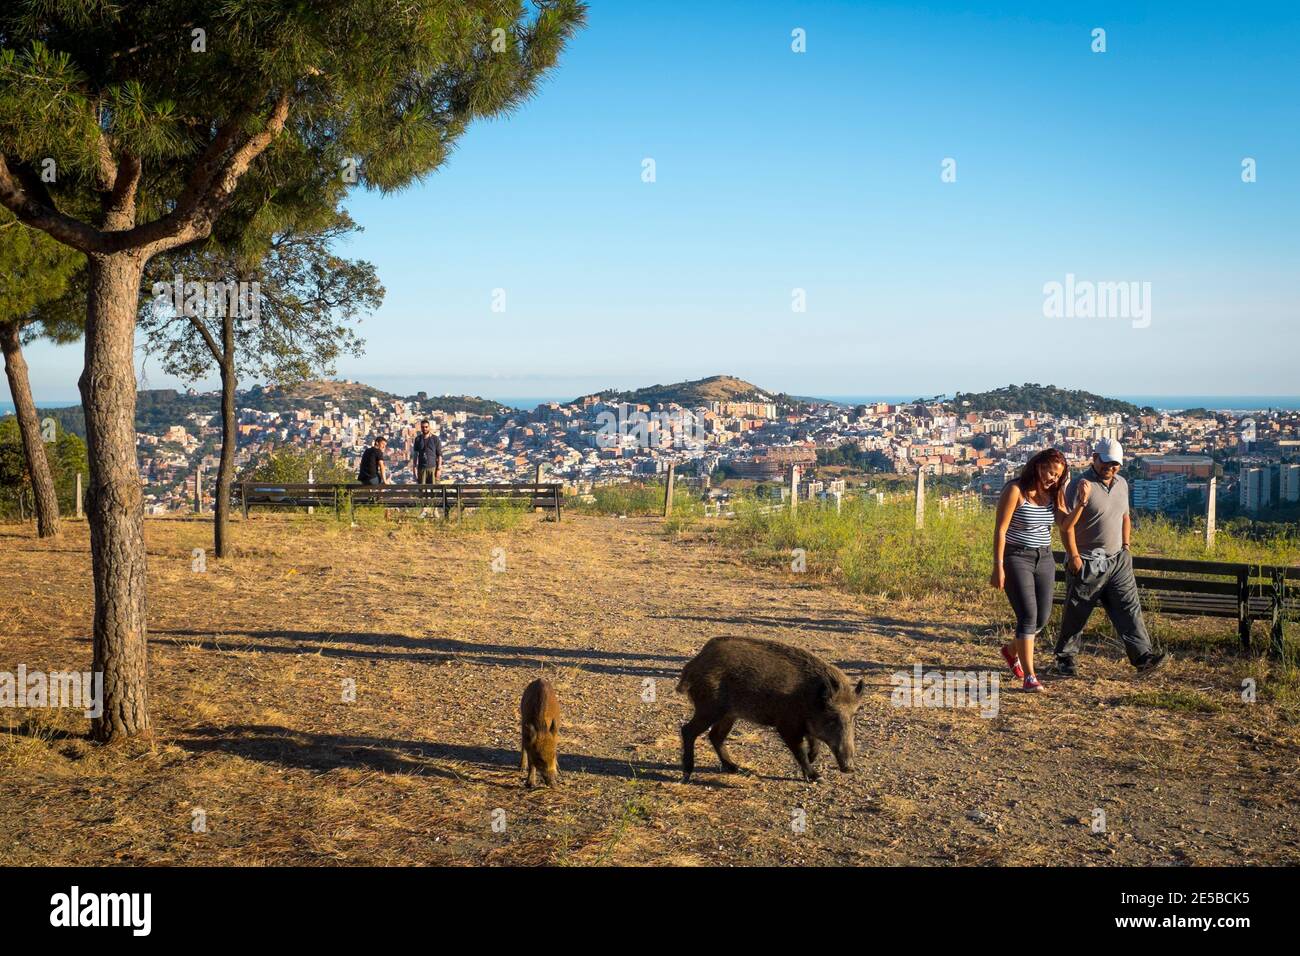 People feeding porc senglar, or wild boar at the Mirador de Montbau in the Serra de Collserola, above Barcelona (1.6 million people), Catalonia, Spain Stock Photo